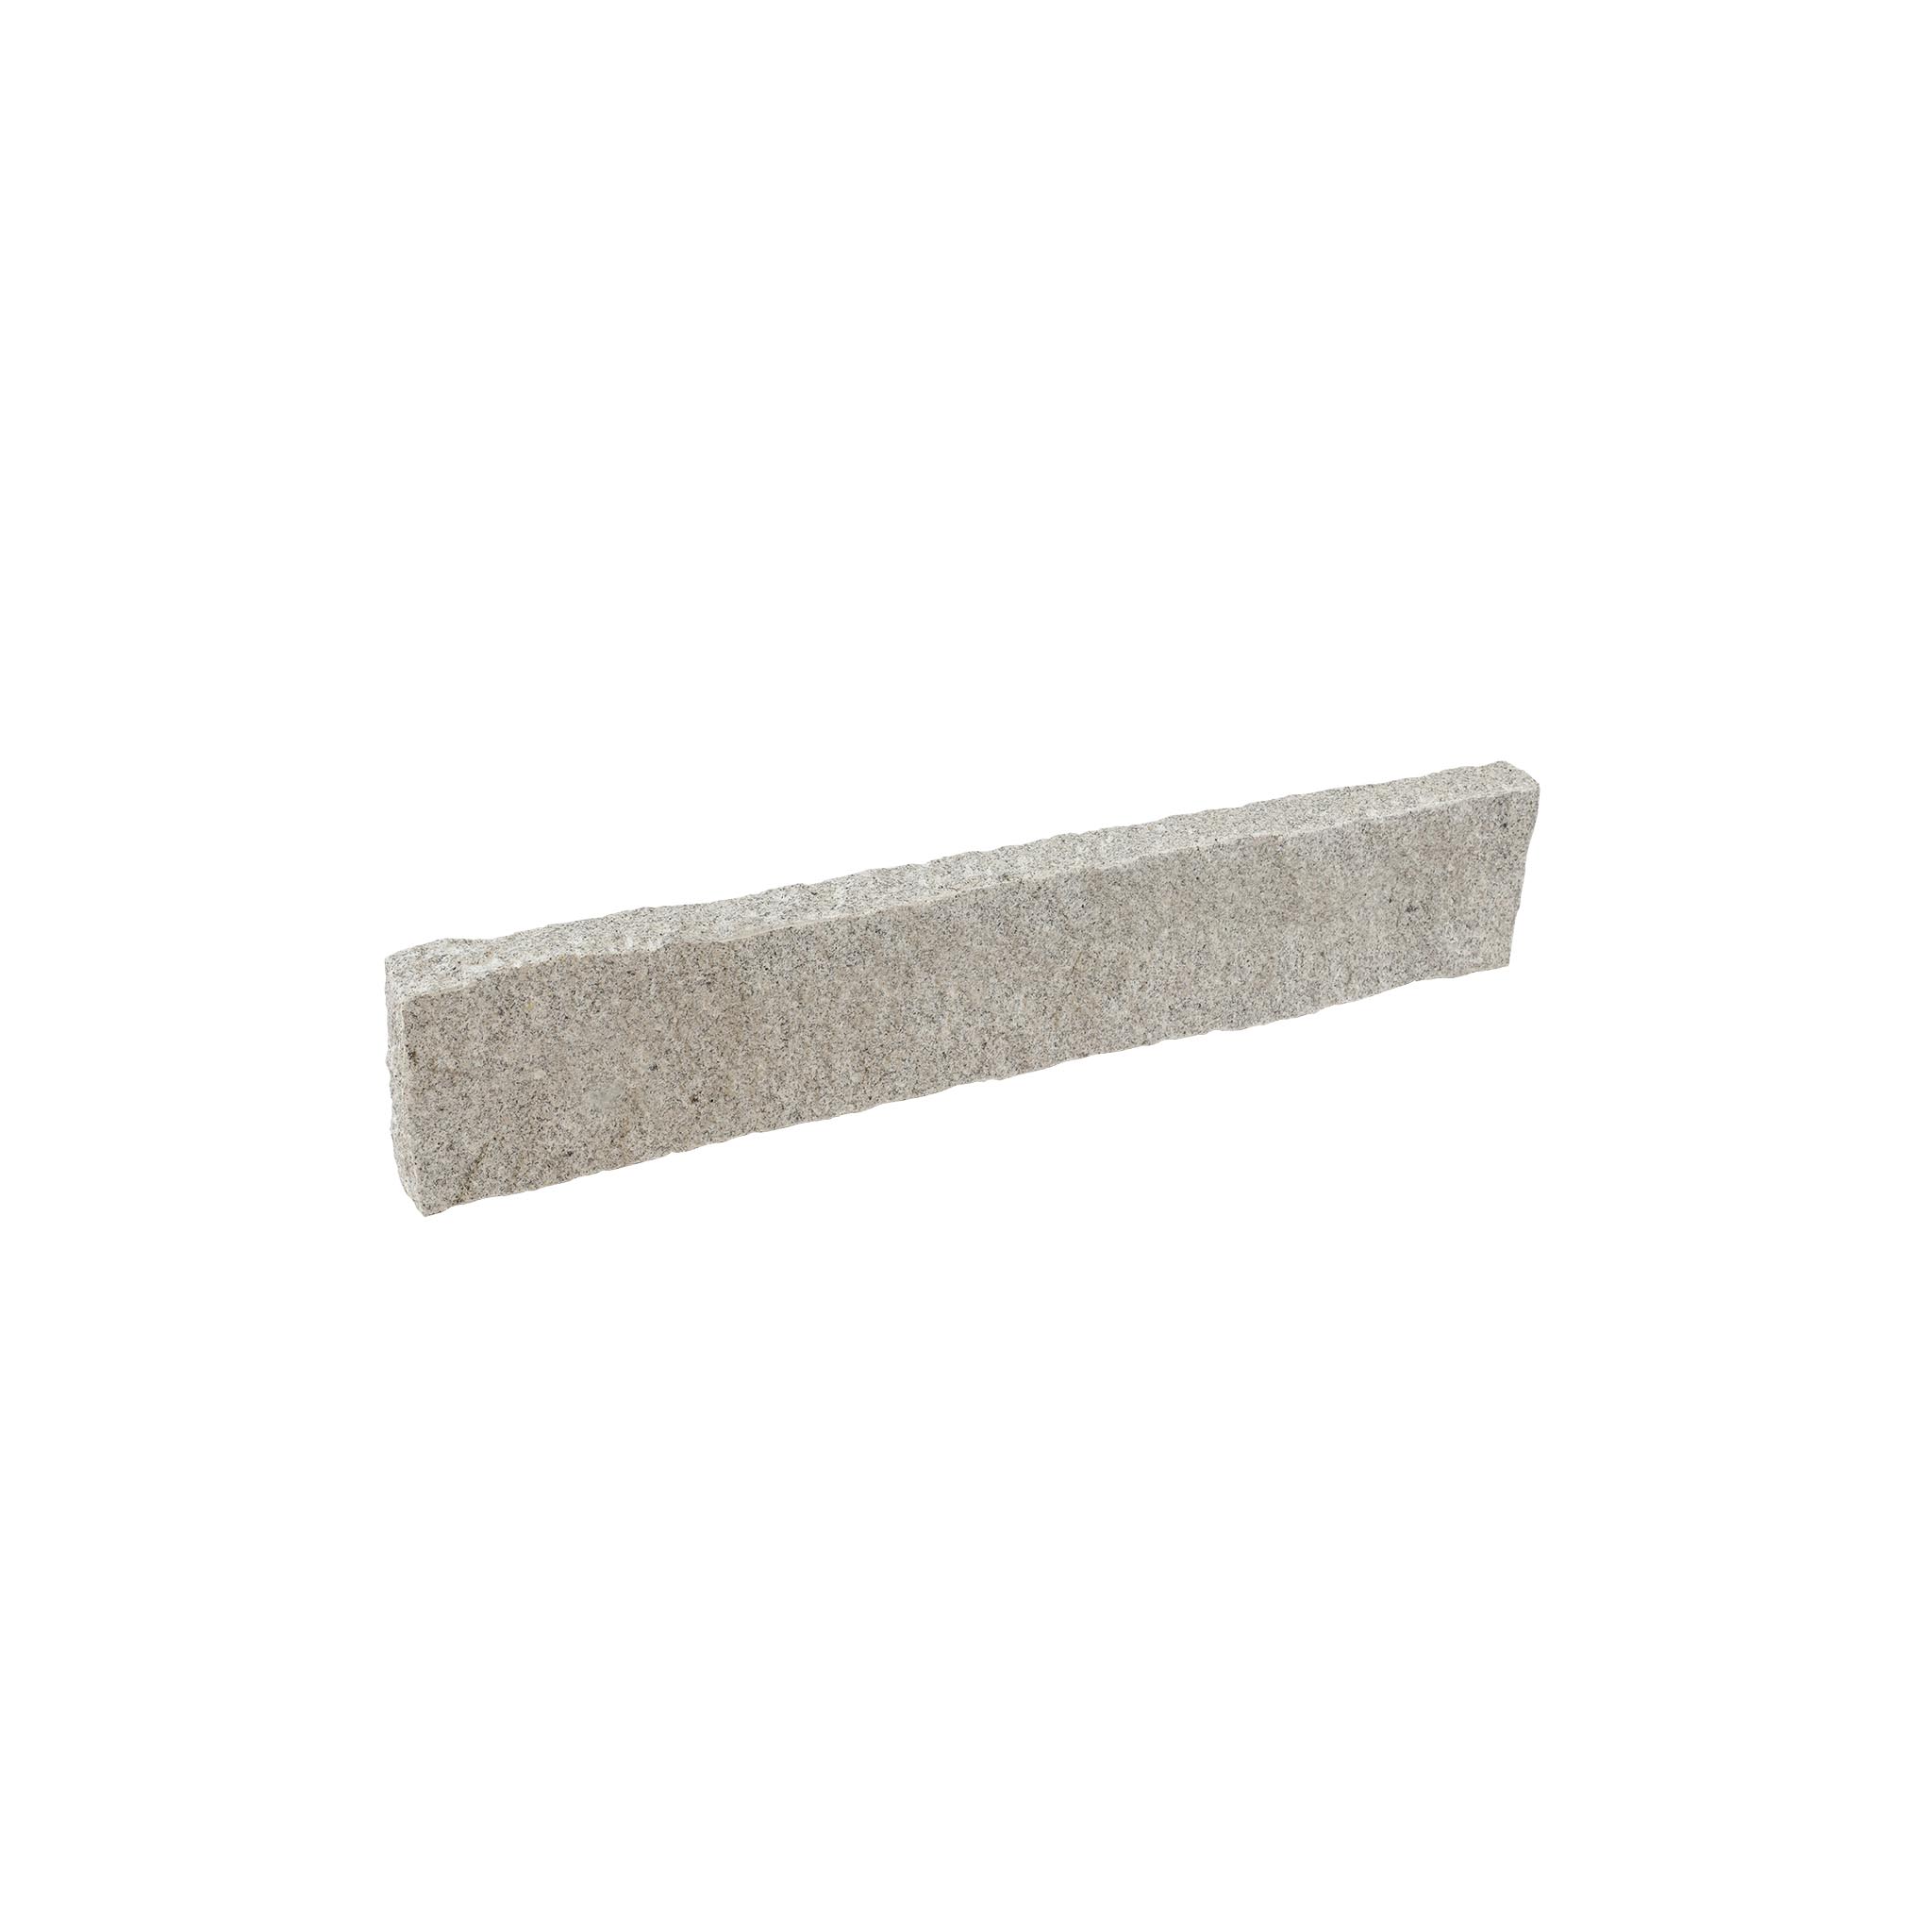 Palisaden, Granit grau (Pina) grob gestockt, Granit Palisade, 7 x 20 x 100 cm, G603, grau, grob gestockt